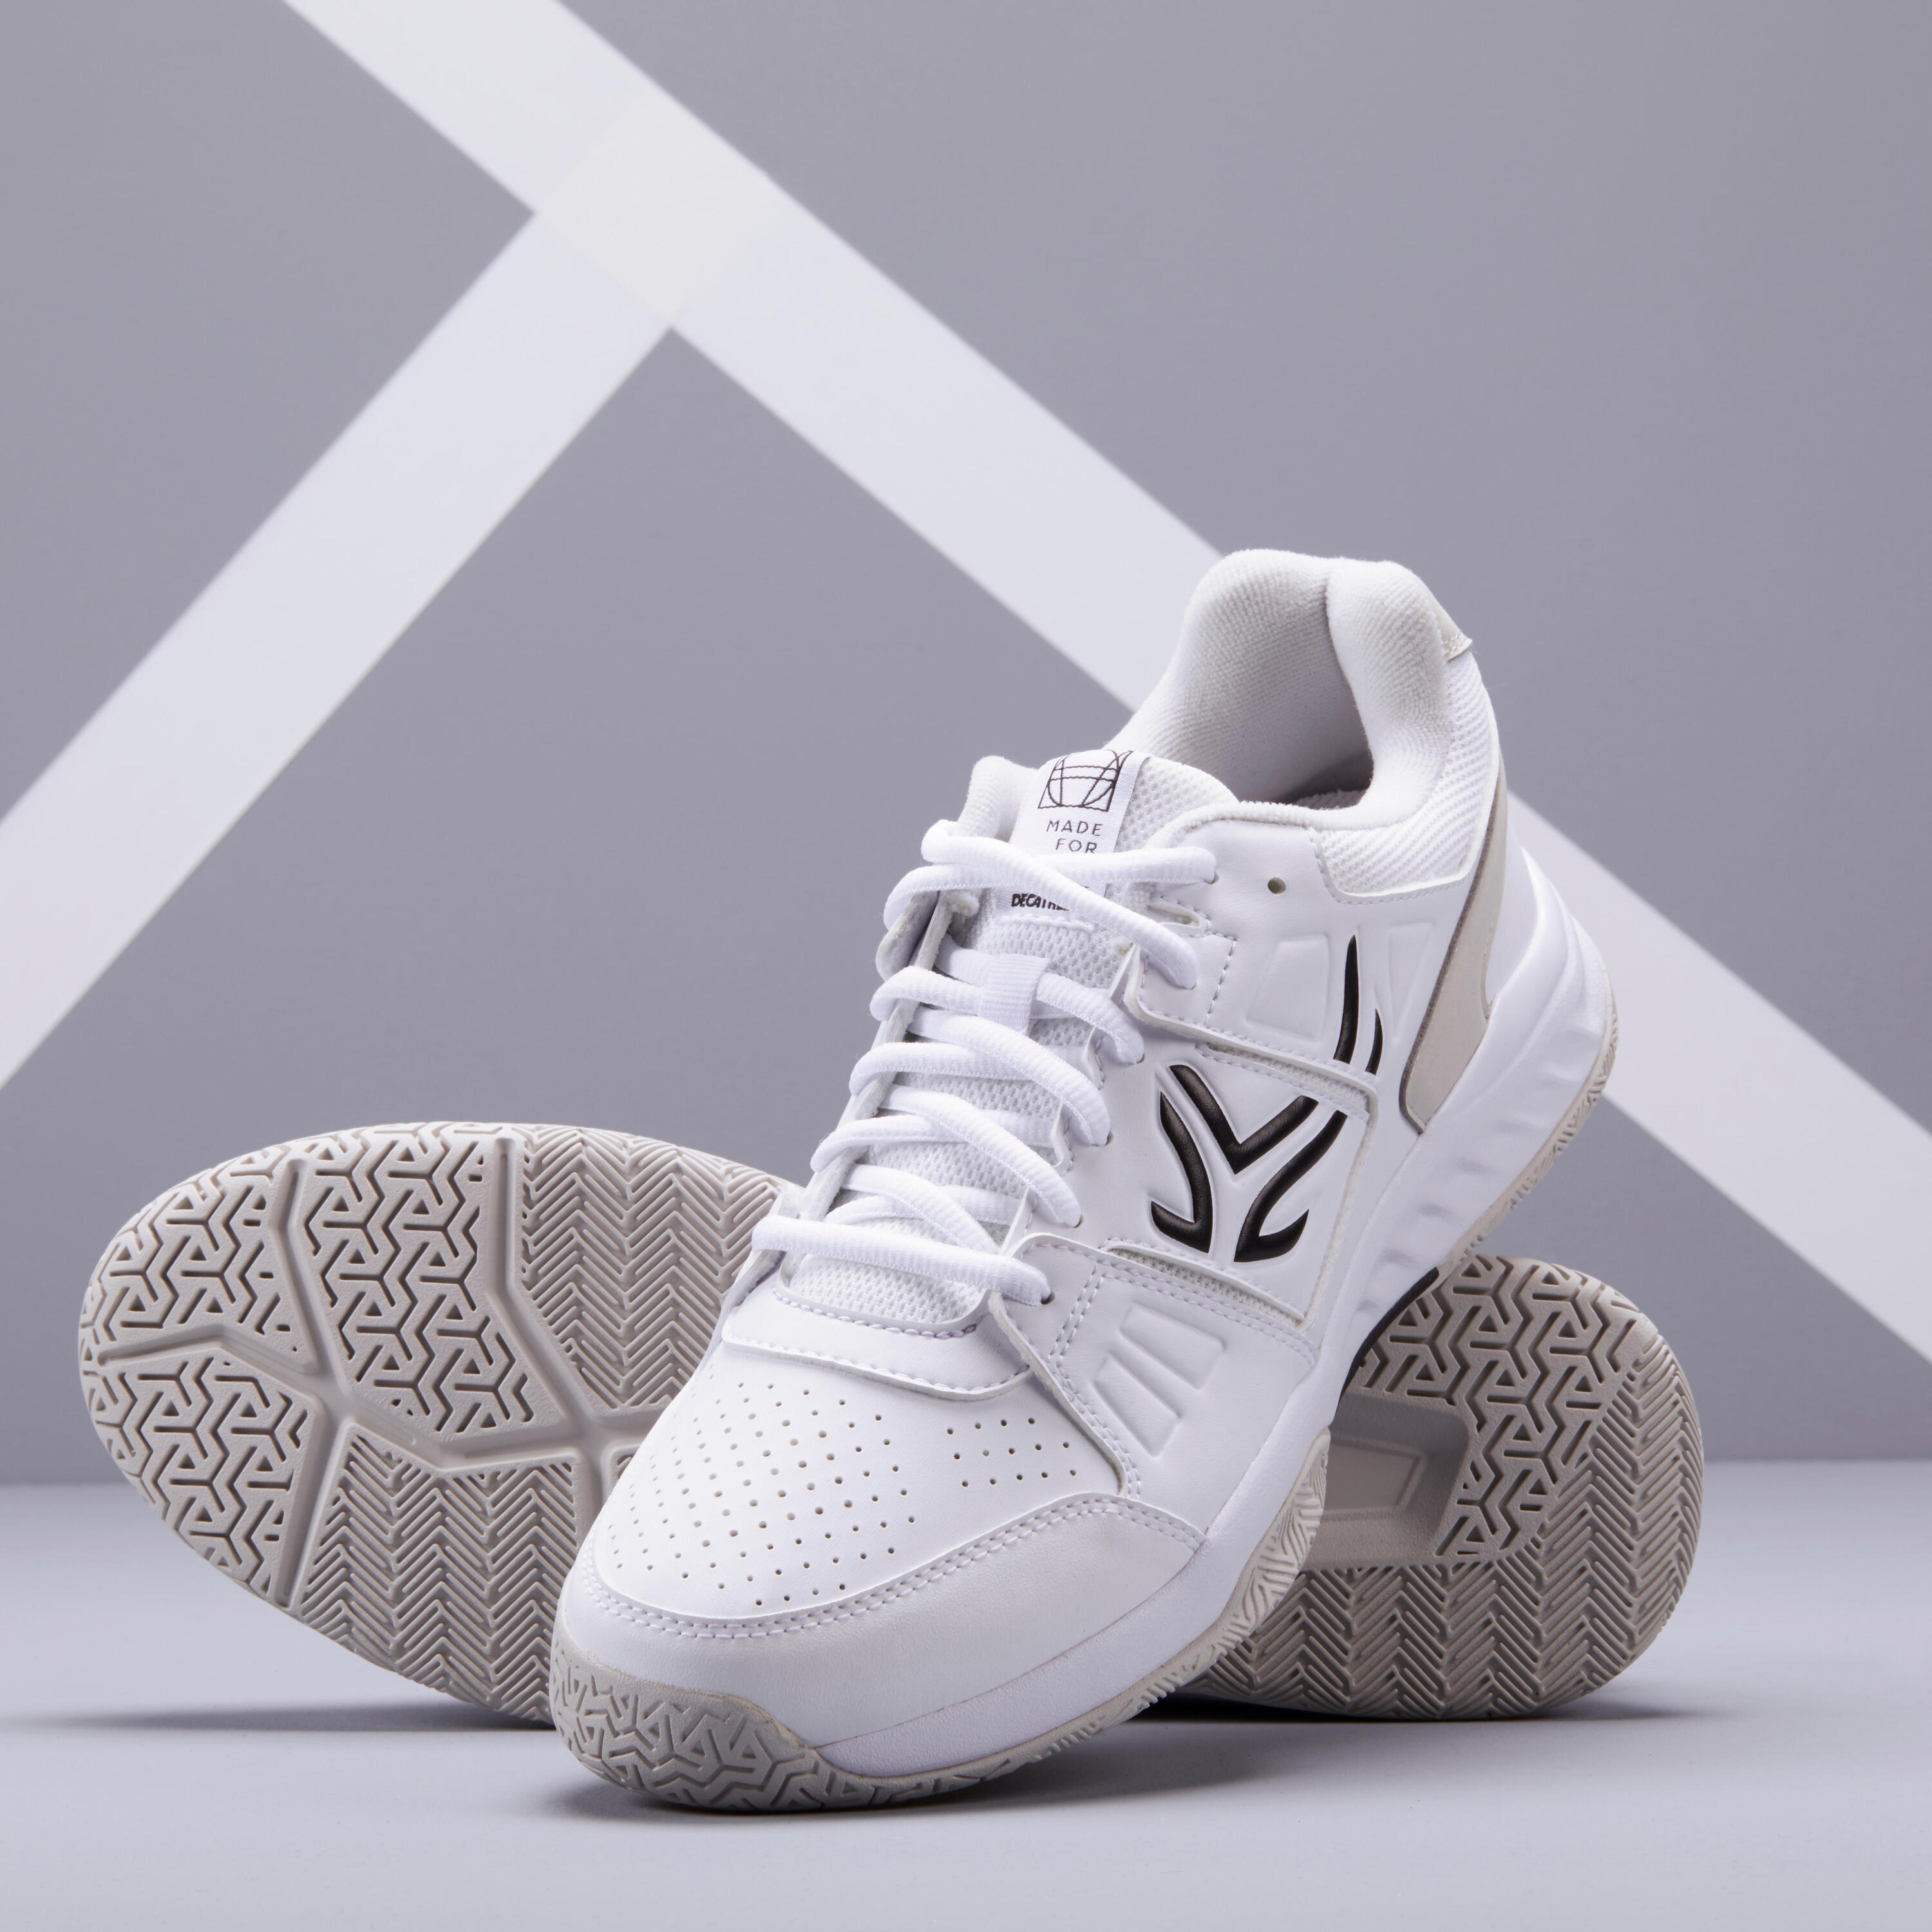 TS160 Multi-Court Tennis Shoes - White 6/8